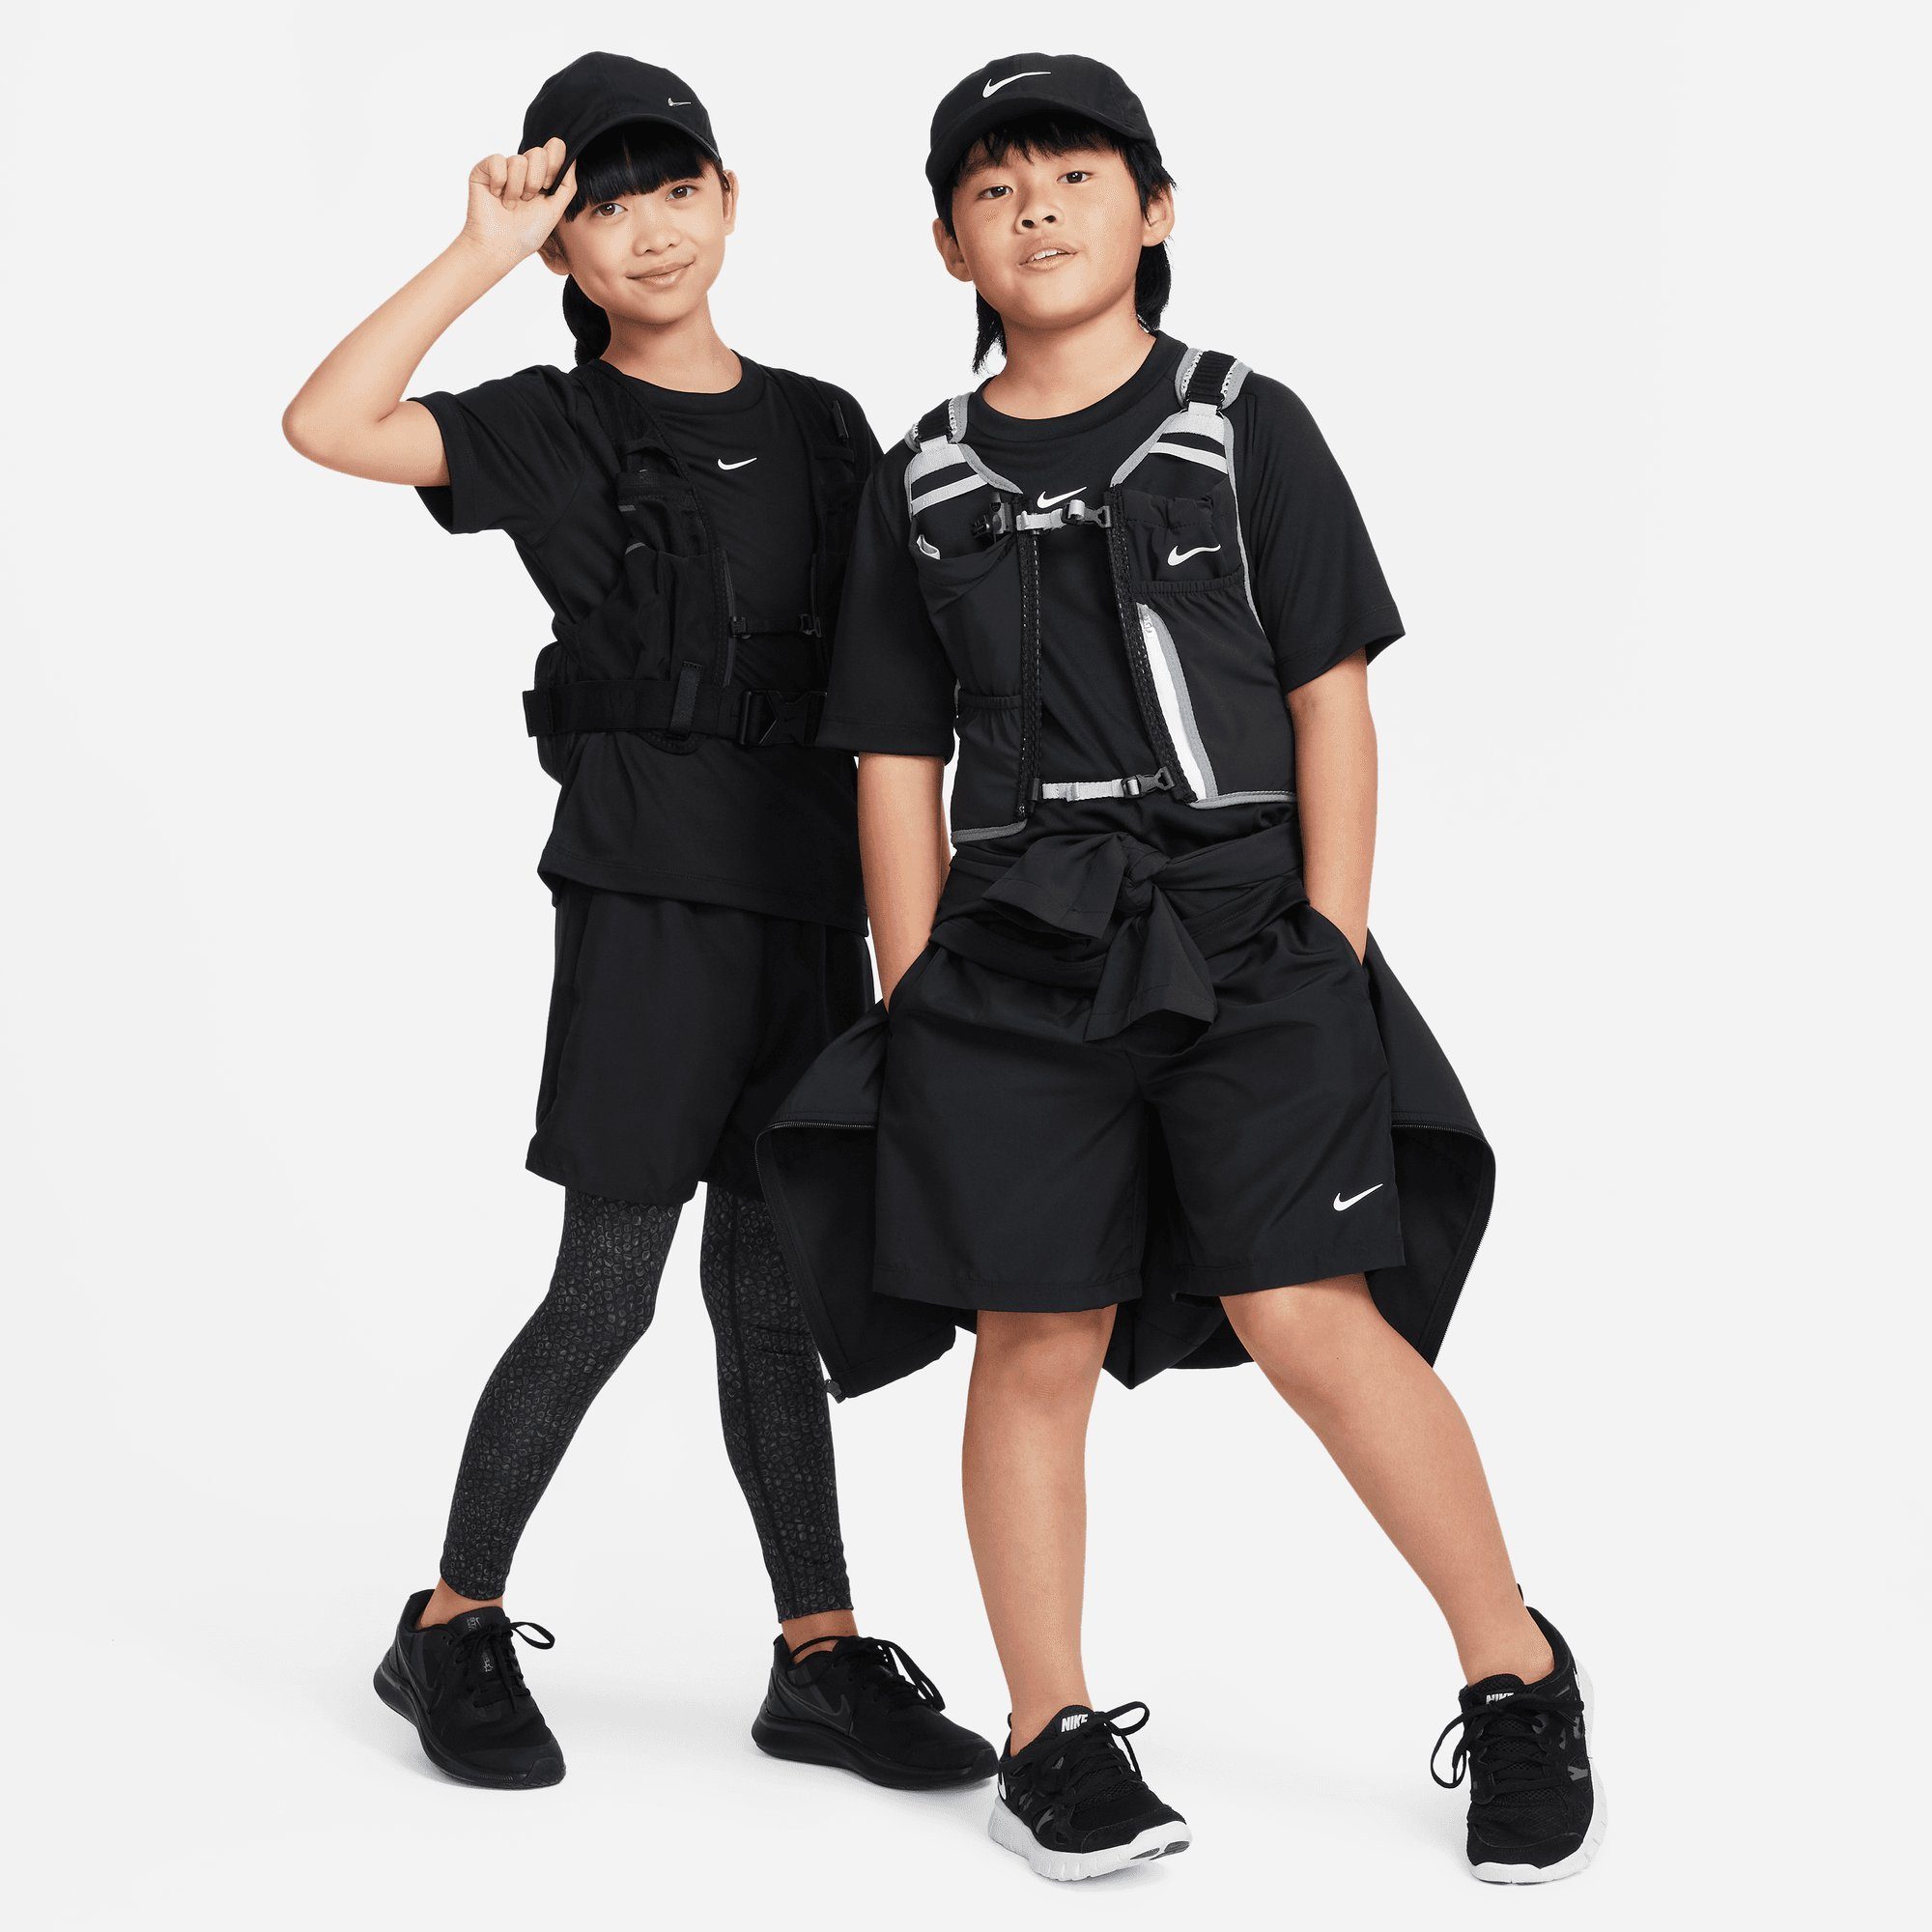 MULTI+ TOP Nike Trainingsshirt BLACK/WHITE BIG TRAINING KIDS' DRI-FIT (BOYS)